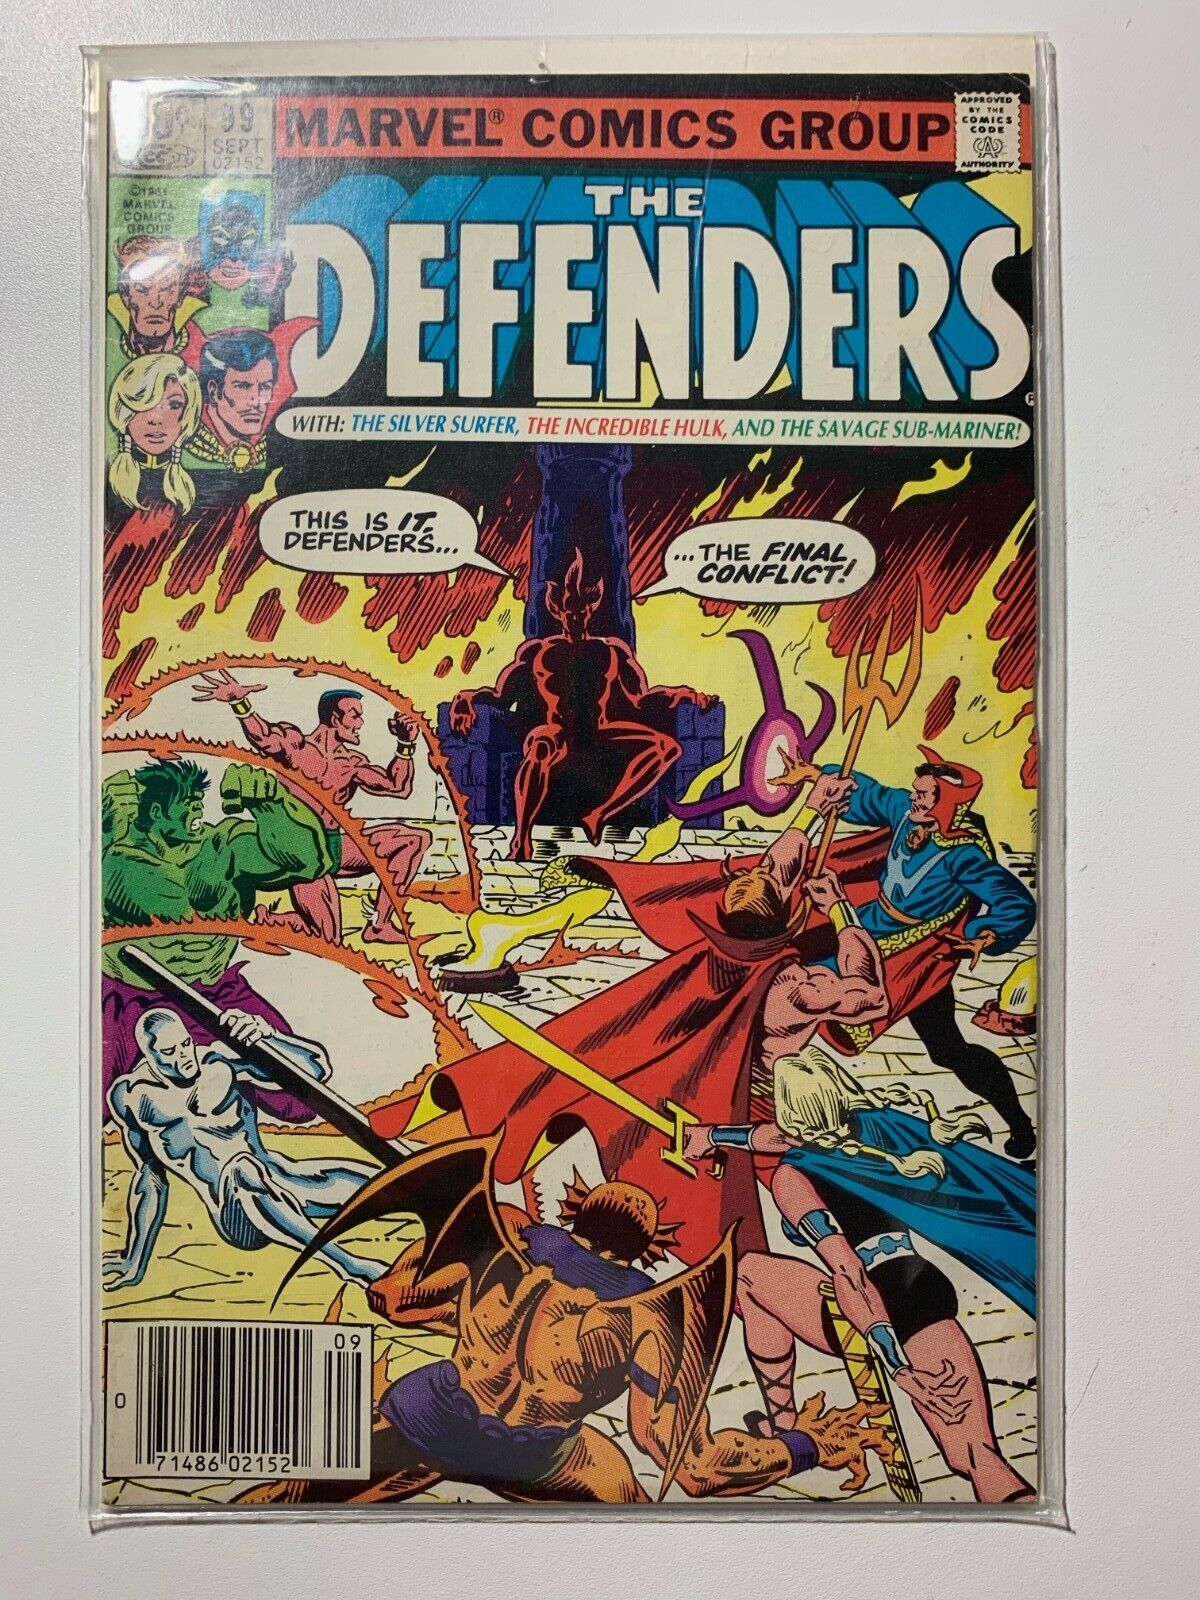 The Defenders #99, Sep 1981, Silver Surfer, Hulk